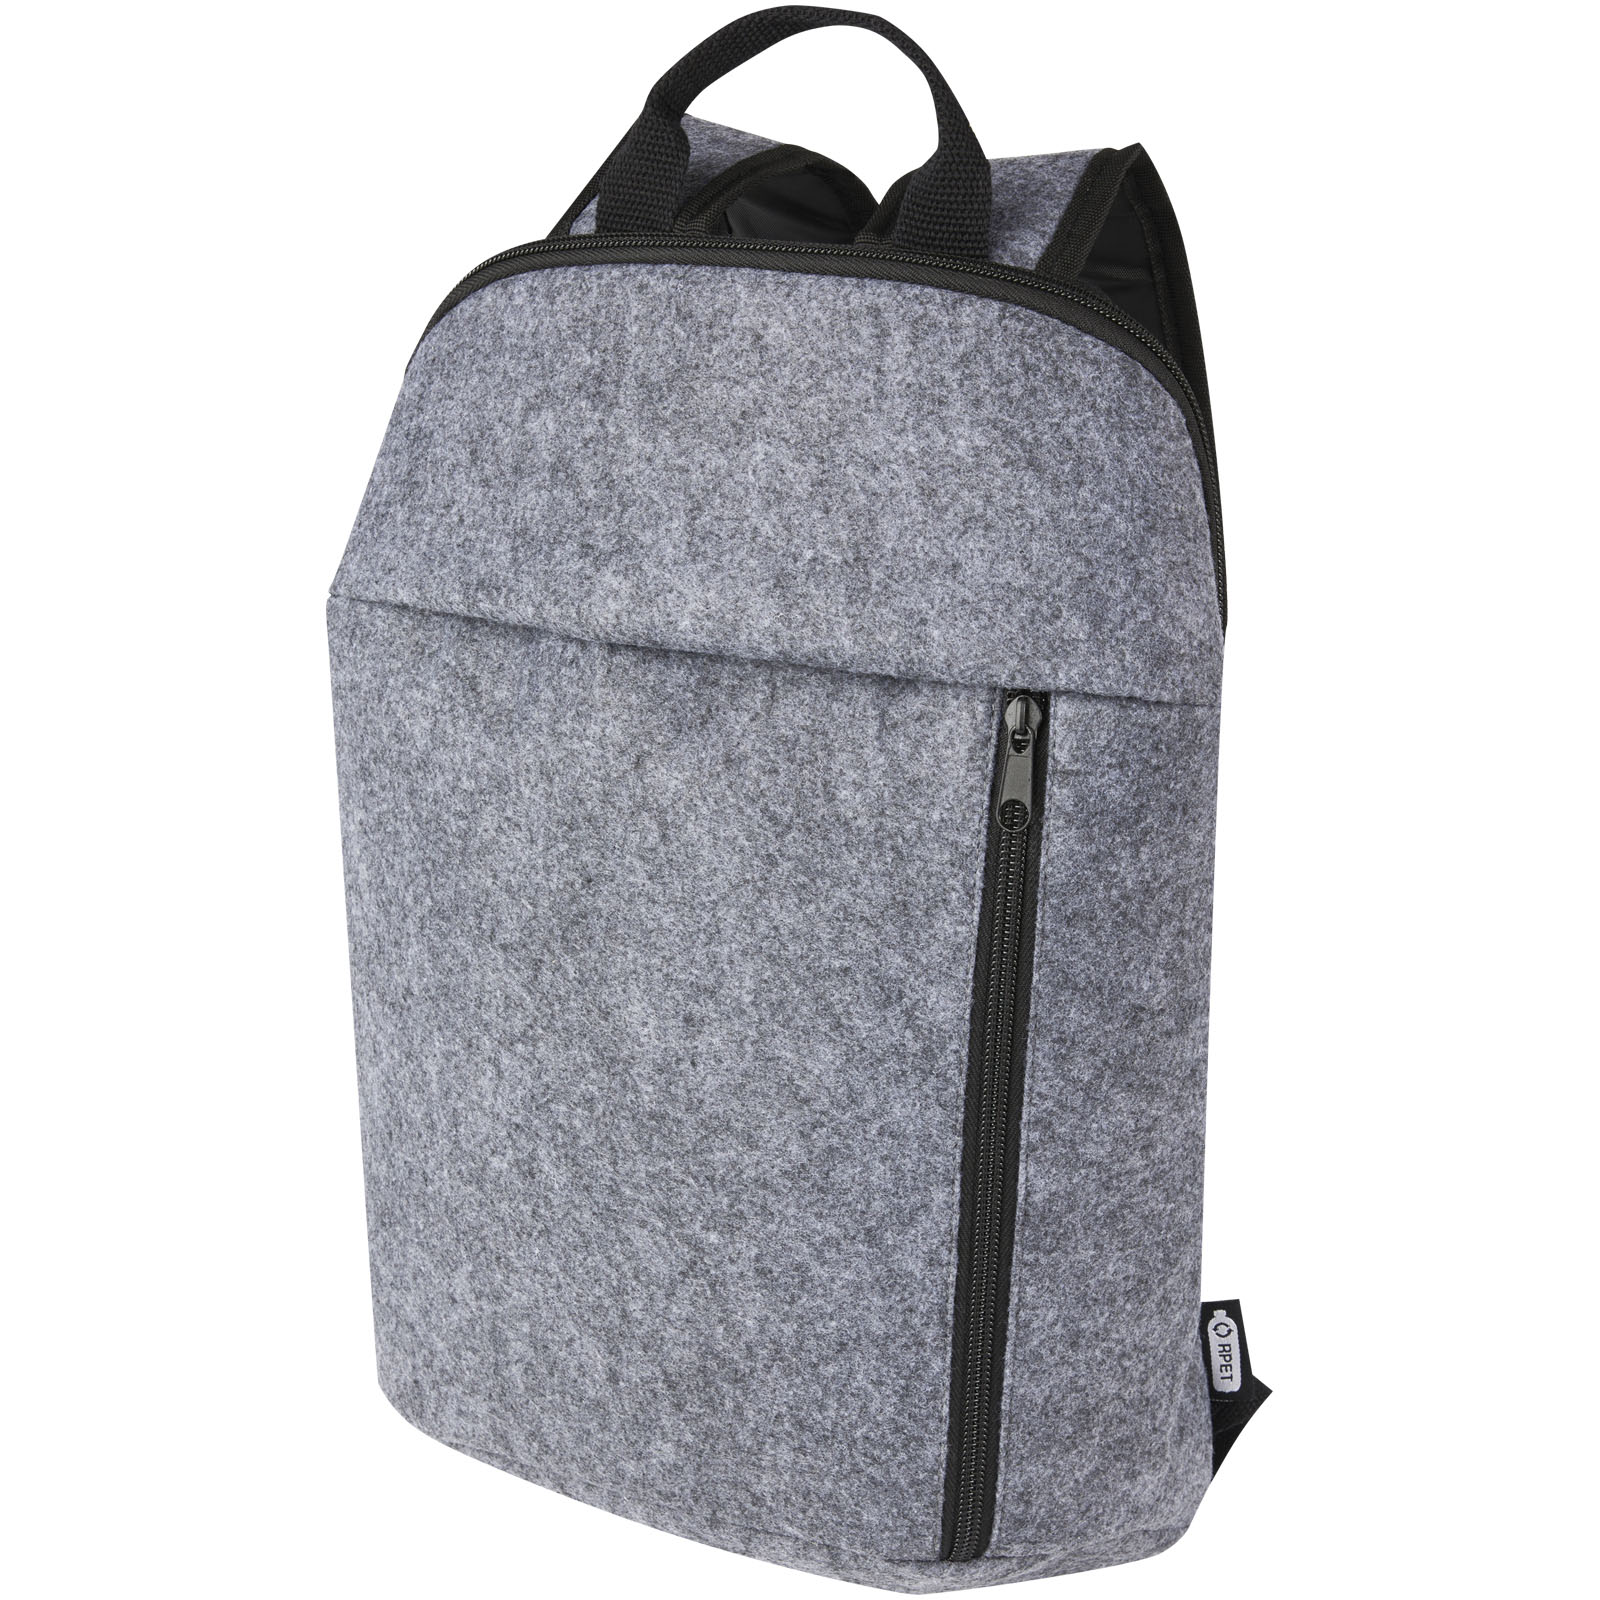 Cooler bags - Felta GRS recycled felt cooler backpack 7L